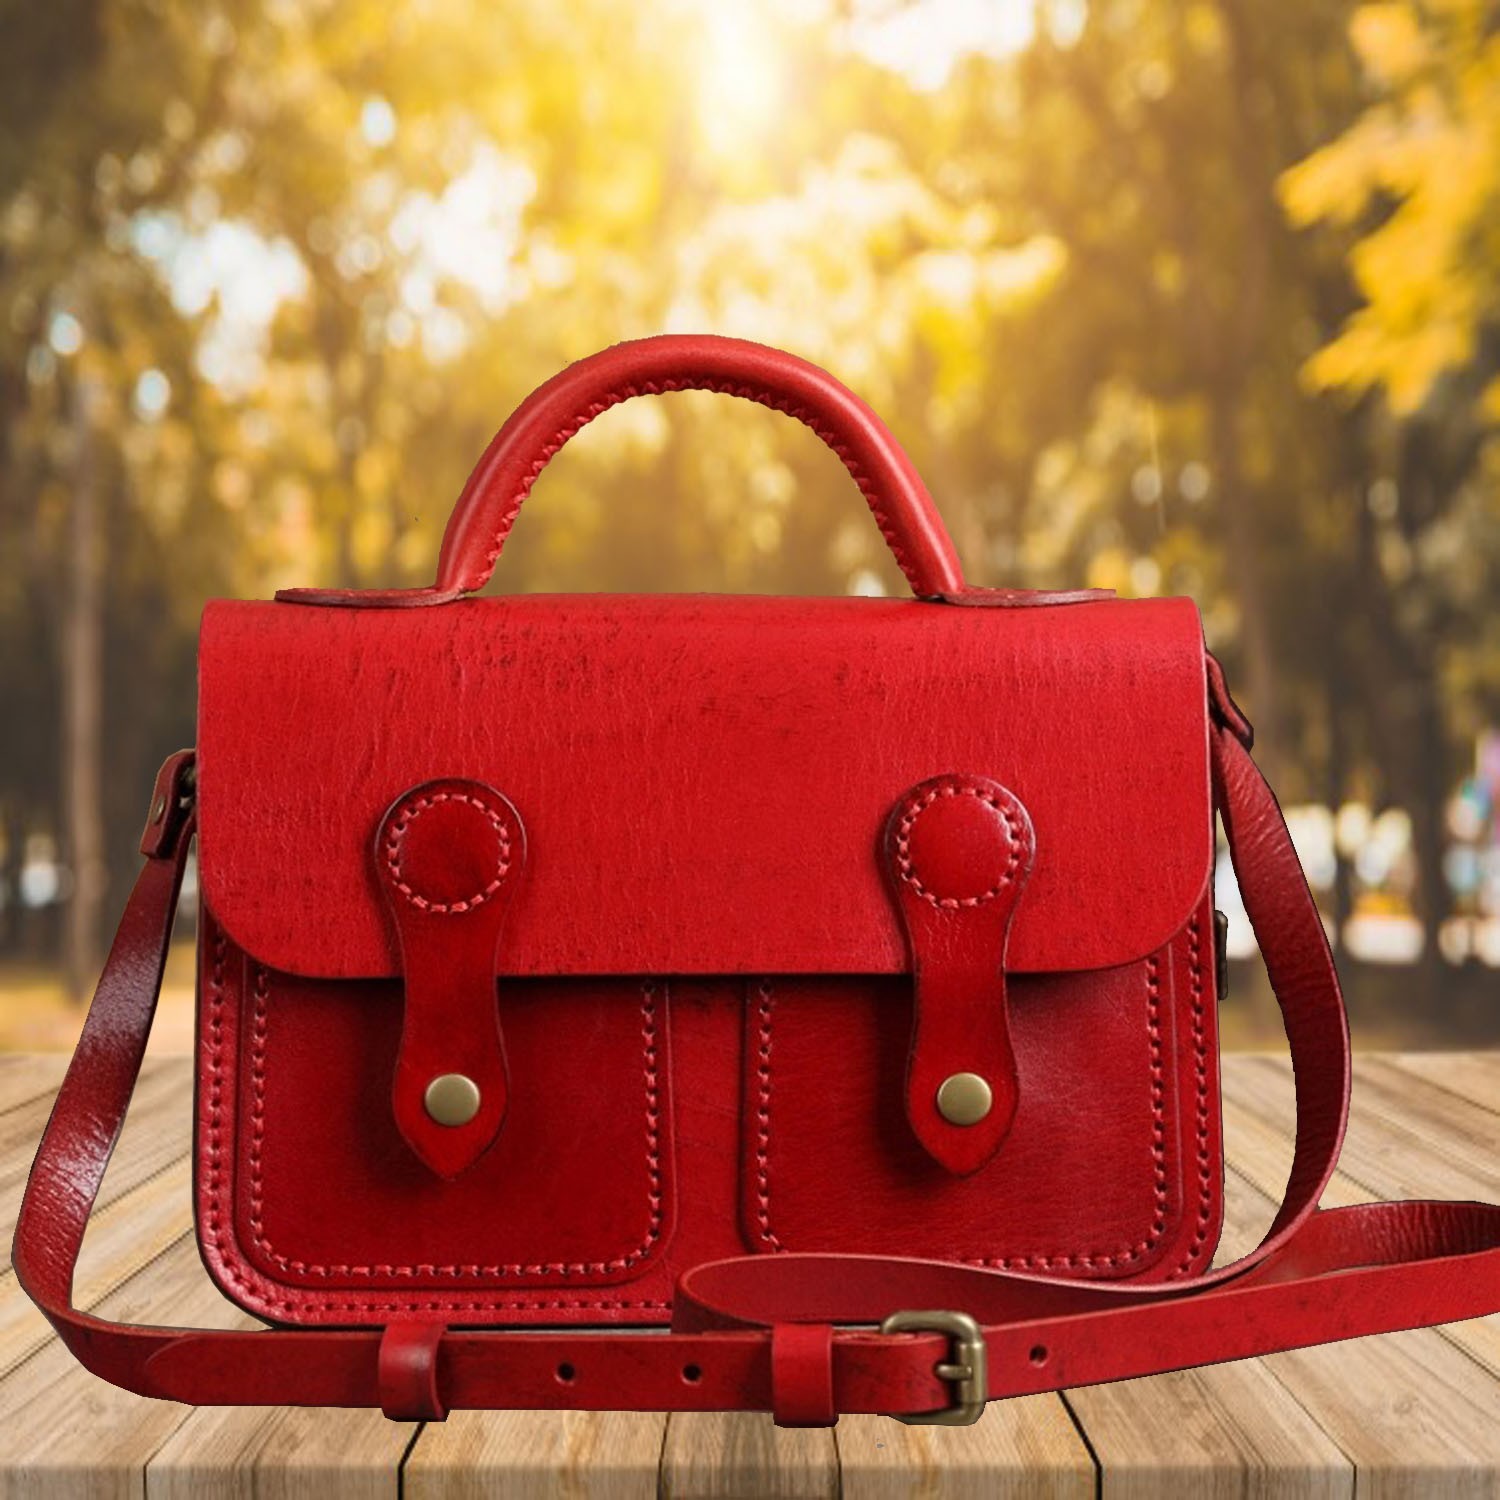 Womens small coffee leather satchel bag | Handmade leather bag ...